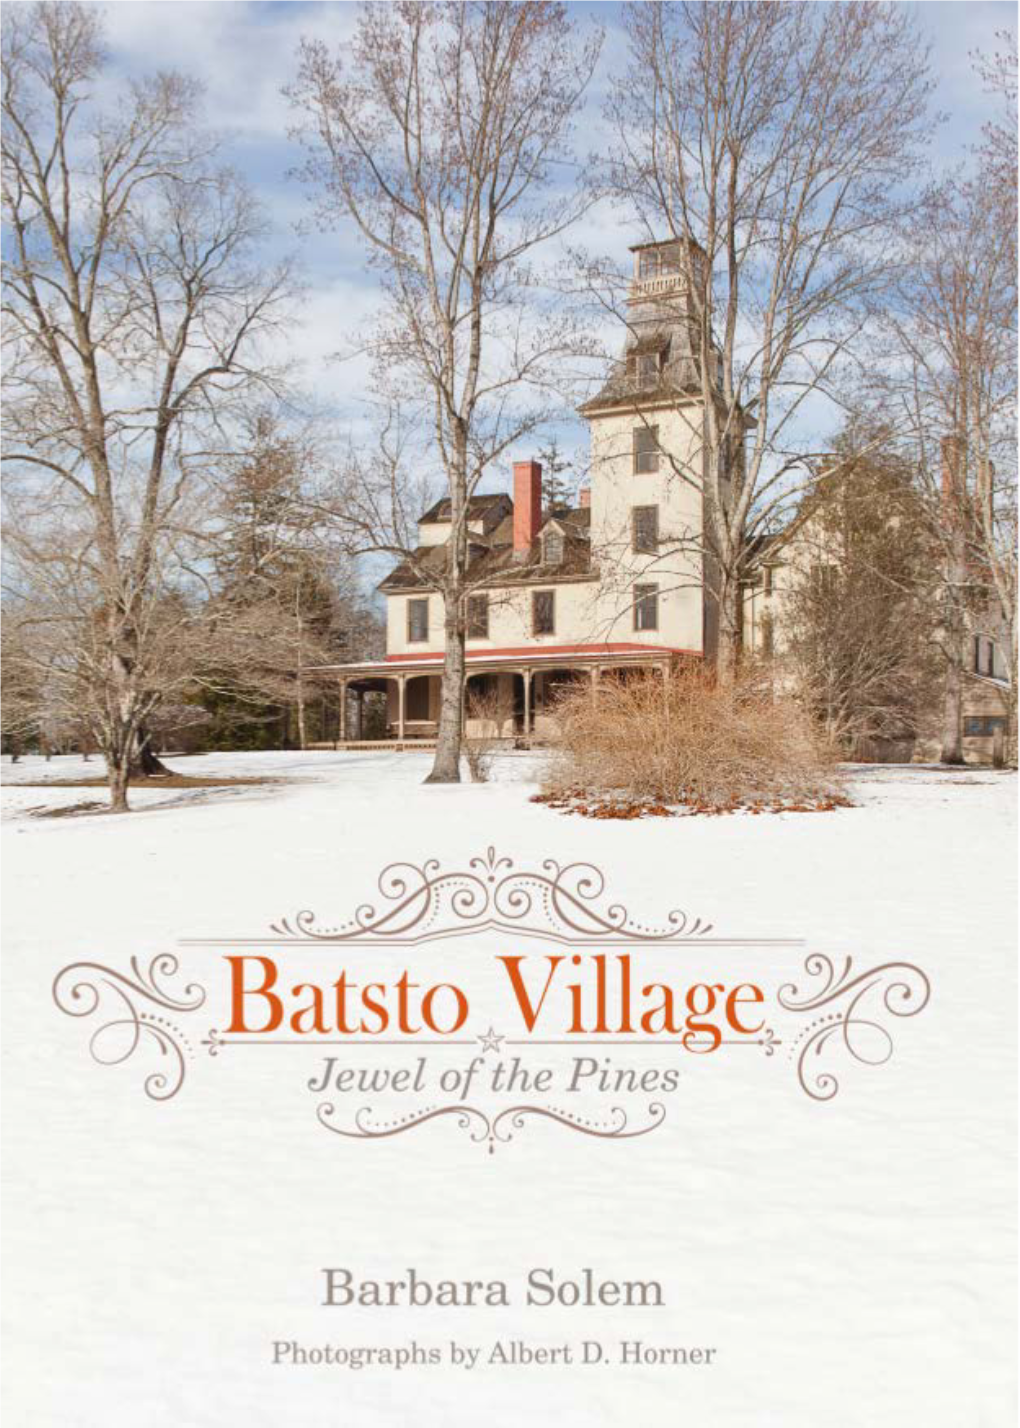 Batsto Village: Jewel of the Pines Copyright © 2014 by Barbara Solem Published By: Plexus Publishing, Inc